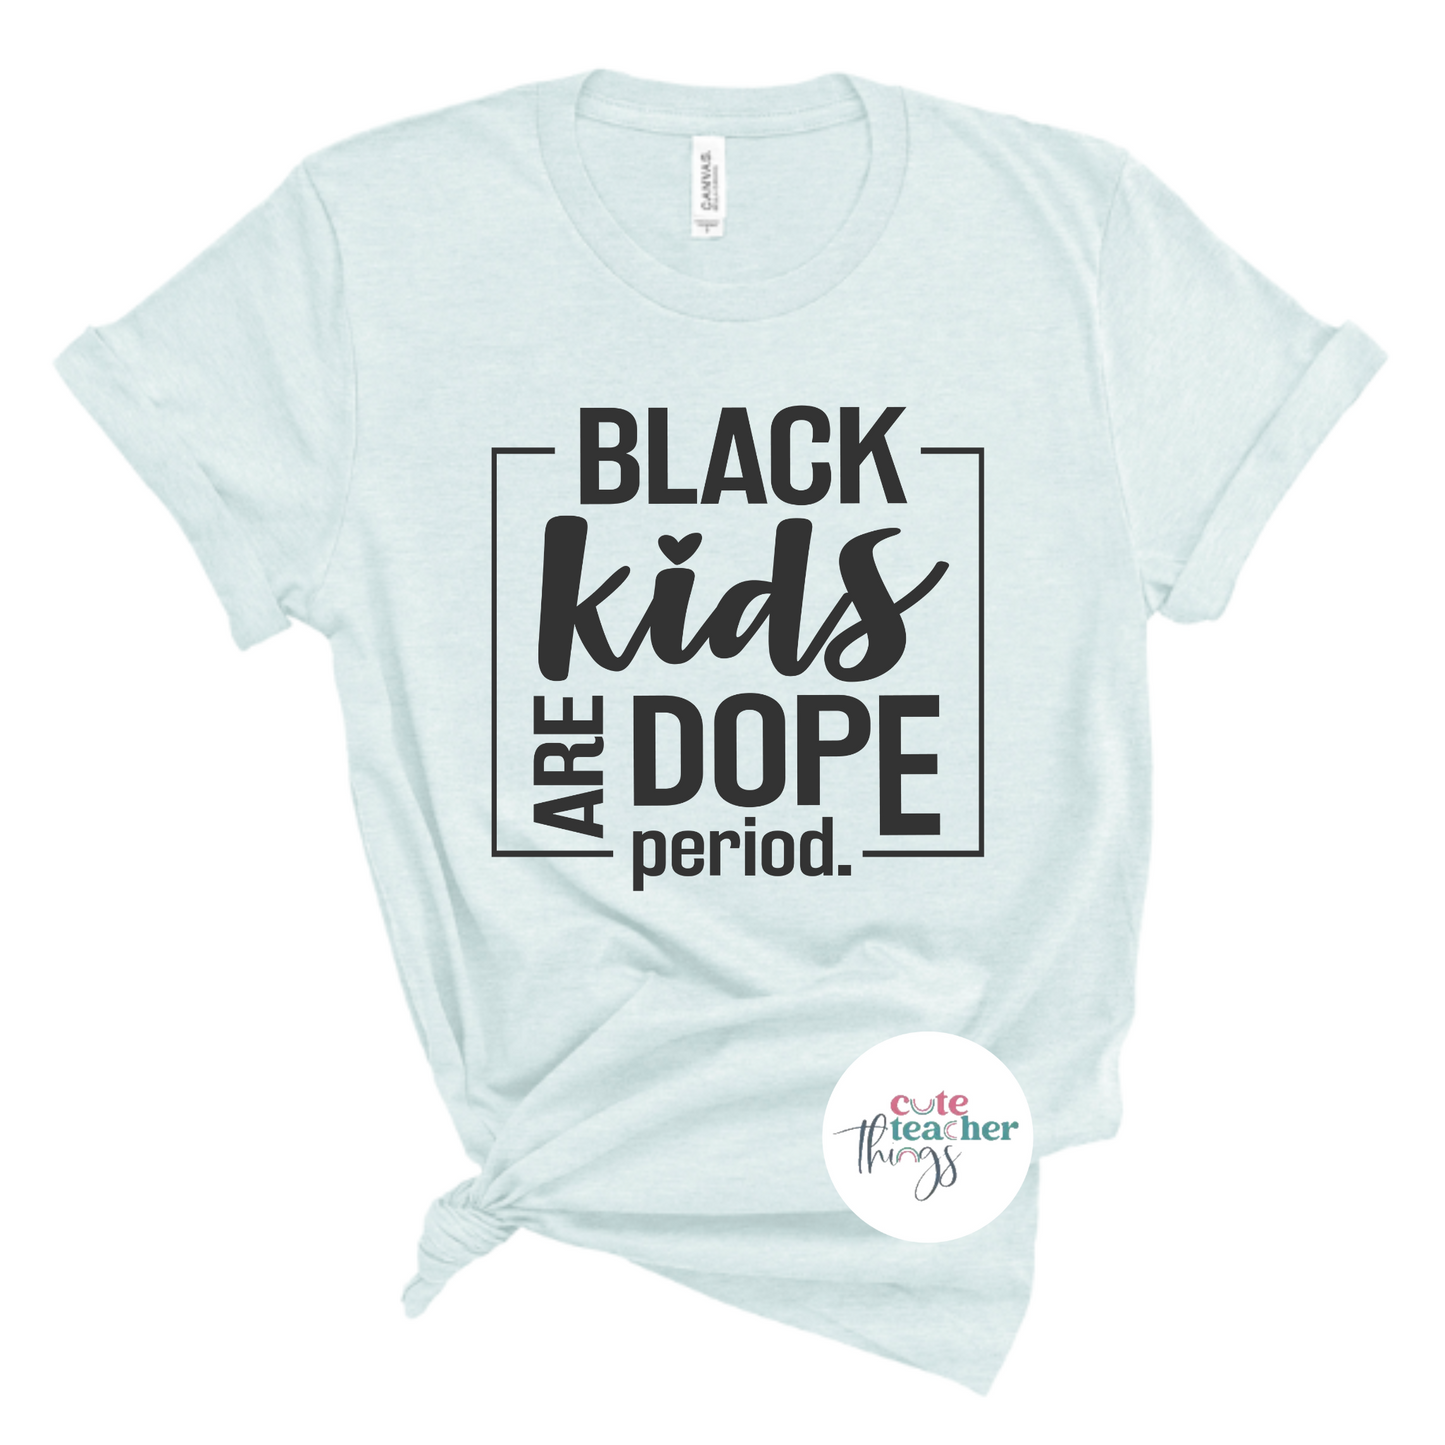 melanin t-shirt, black power, i am black history shirt